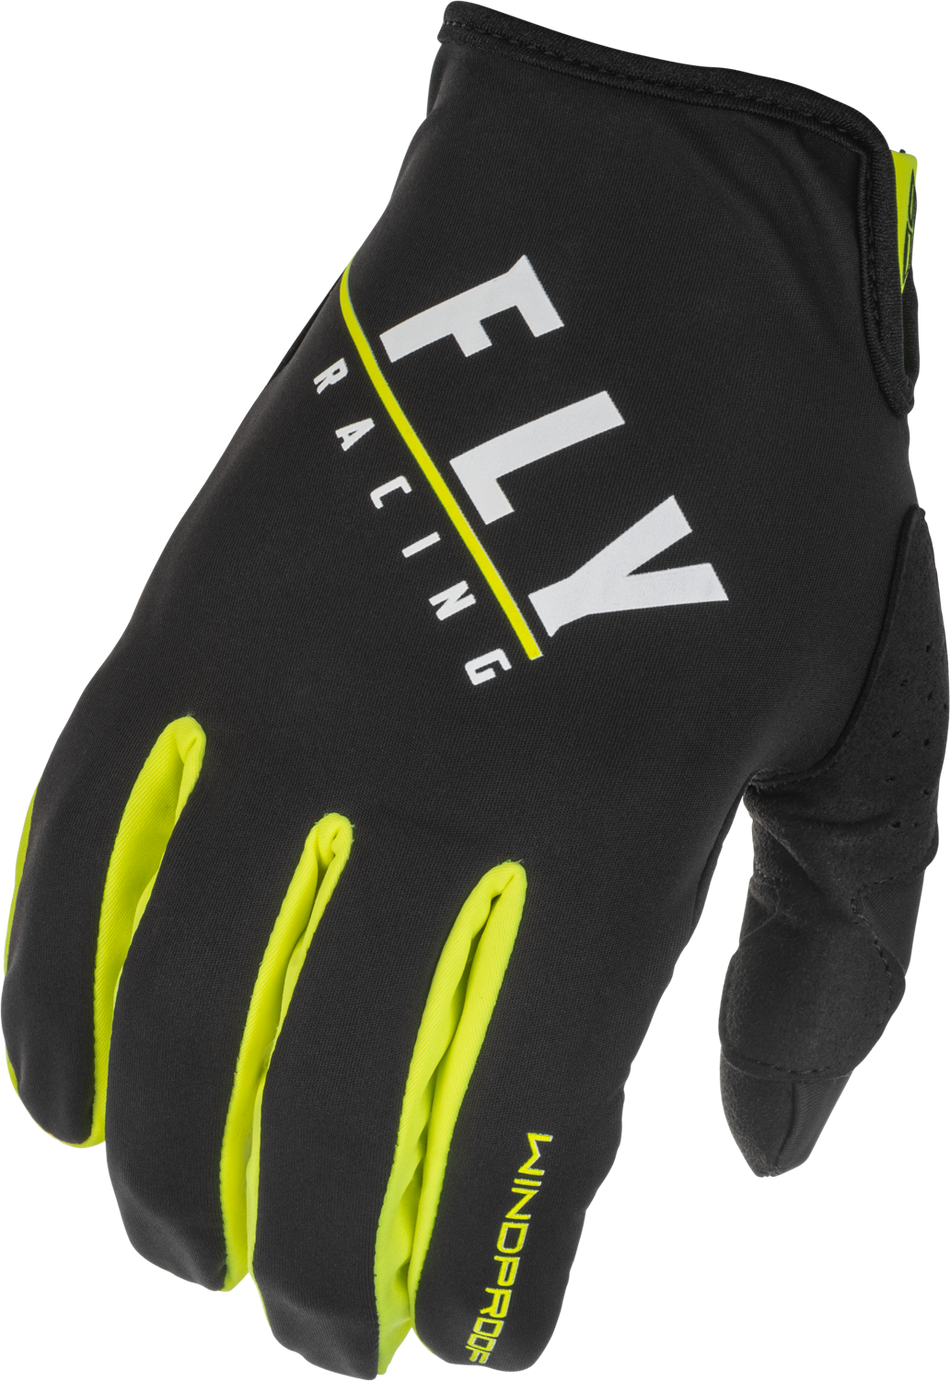 FLY RACING Windproof Gloves Black/Hi-Vis Sz 07 371-14207